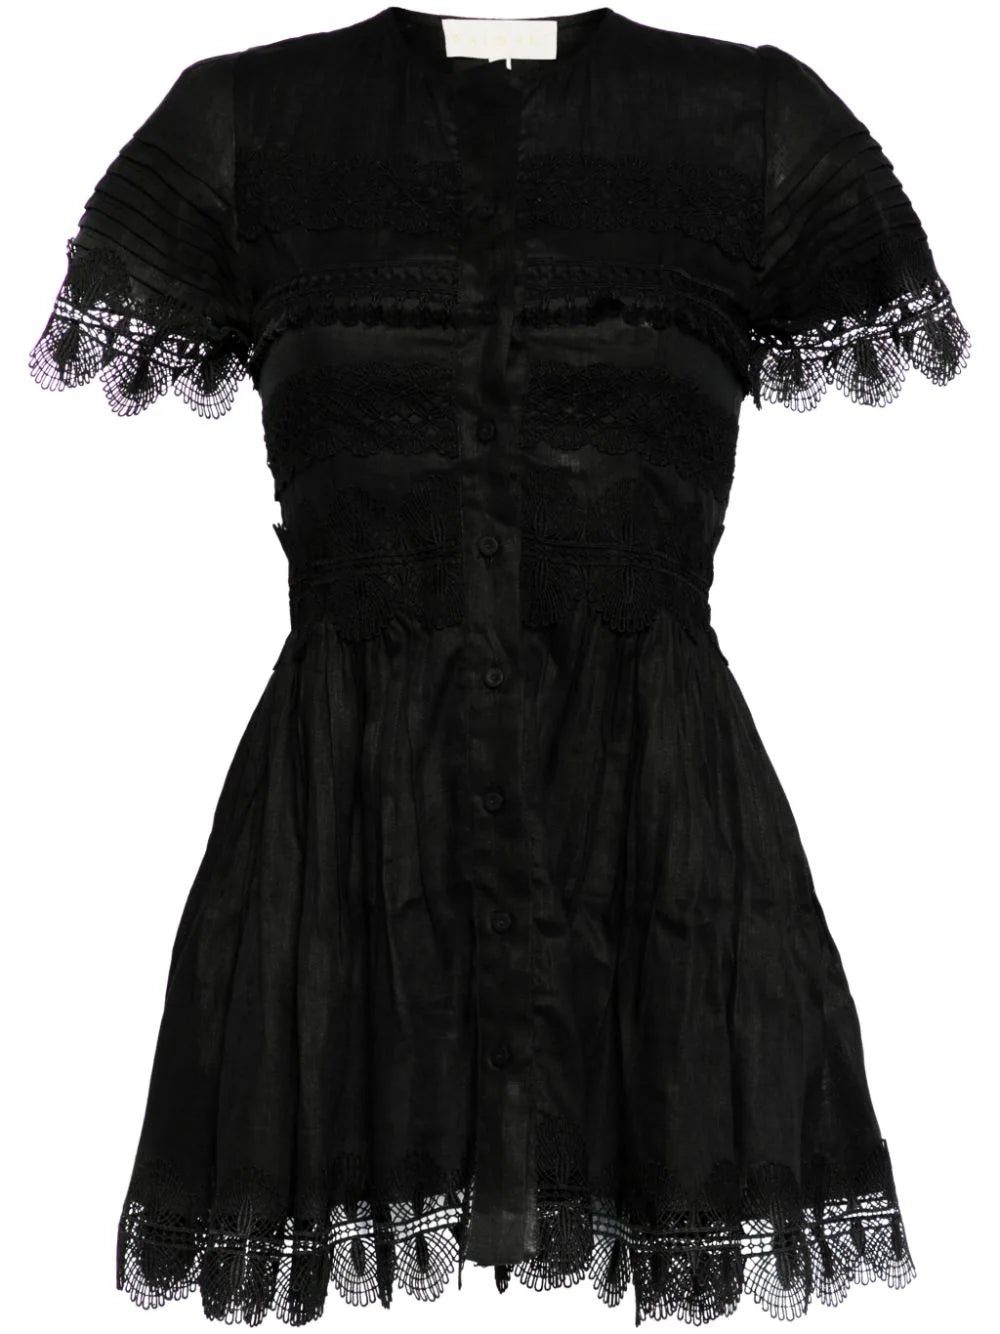 Violetta Dress in Black